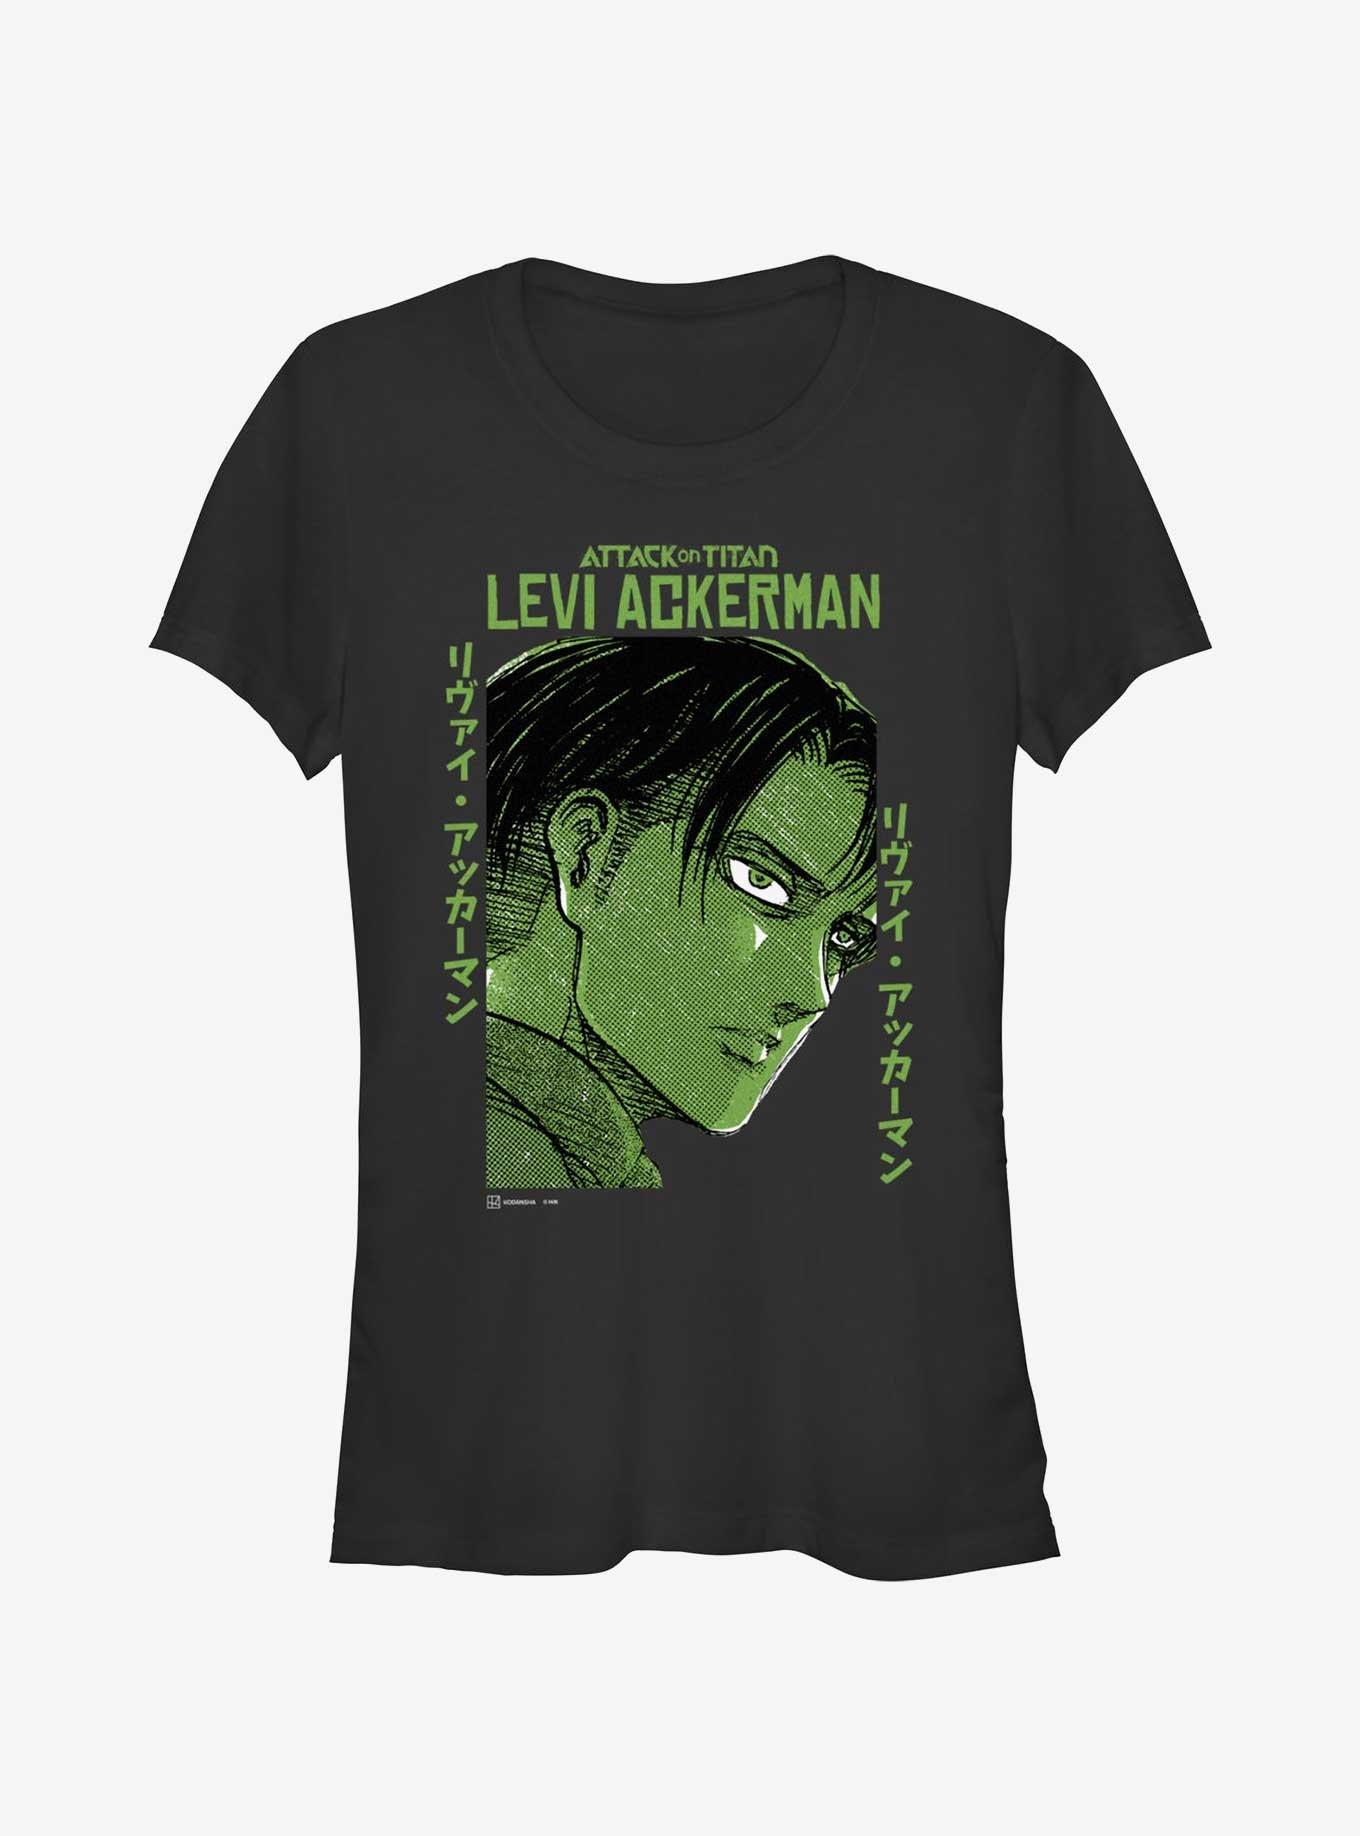 Attack on Titan Levi Ackerman Portrait Girls T-Shirt